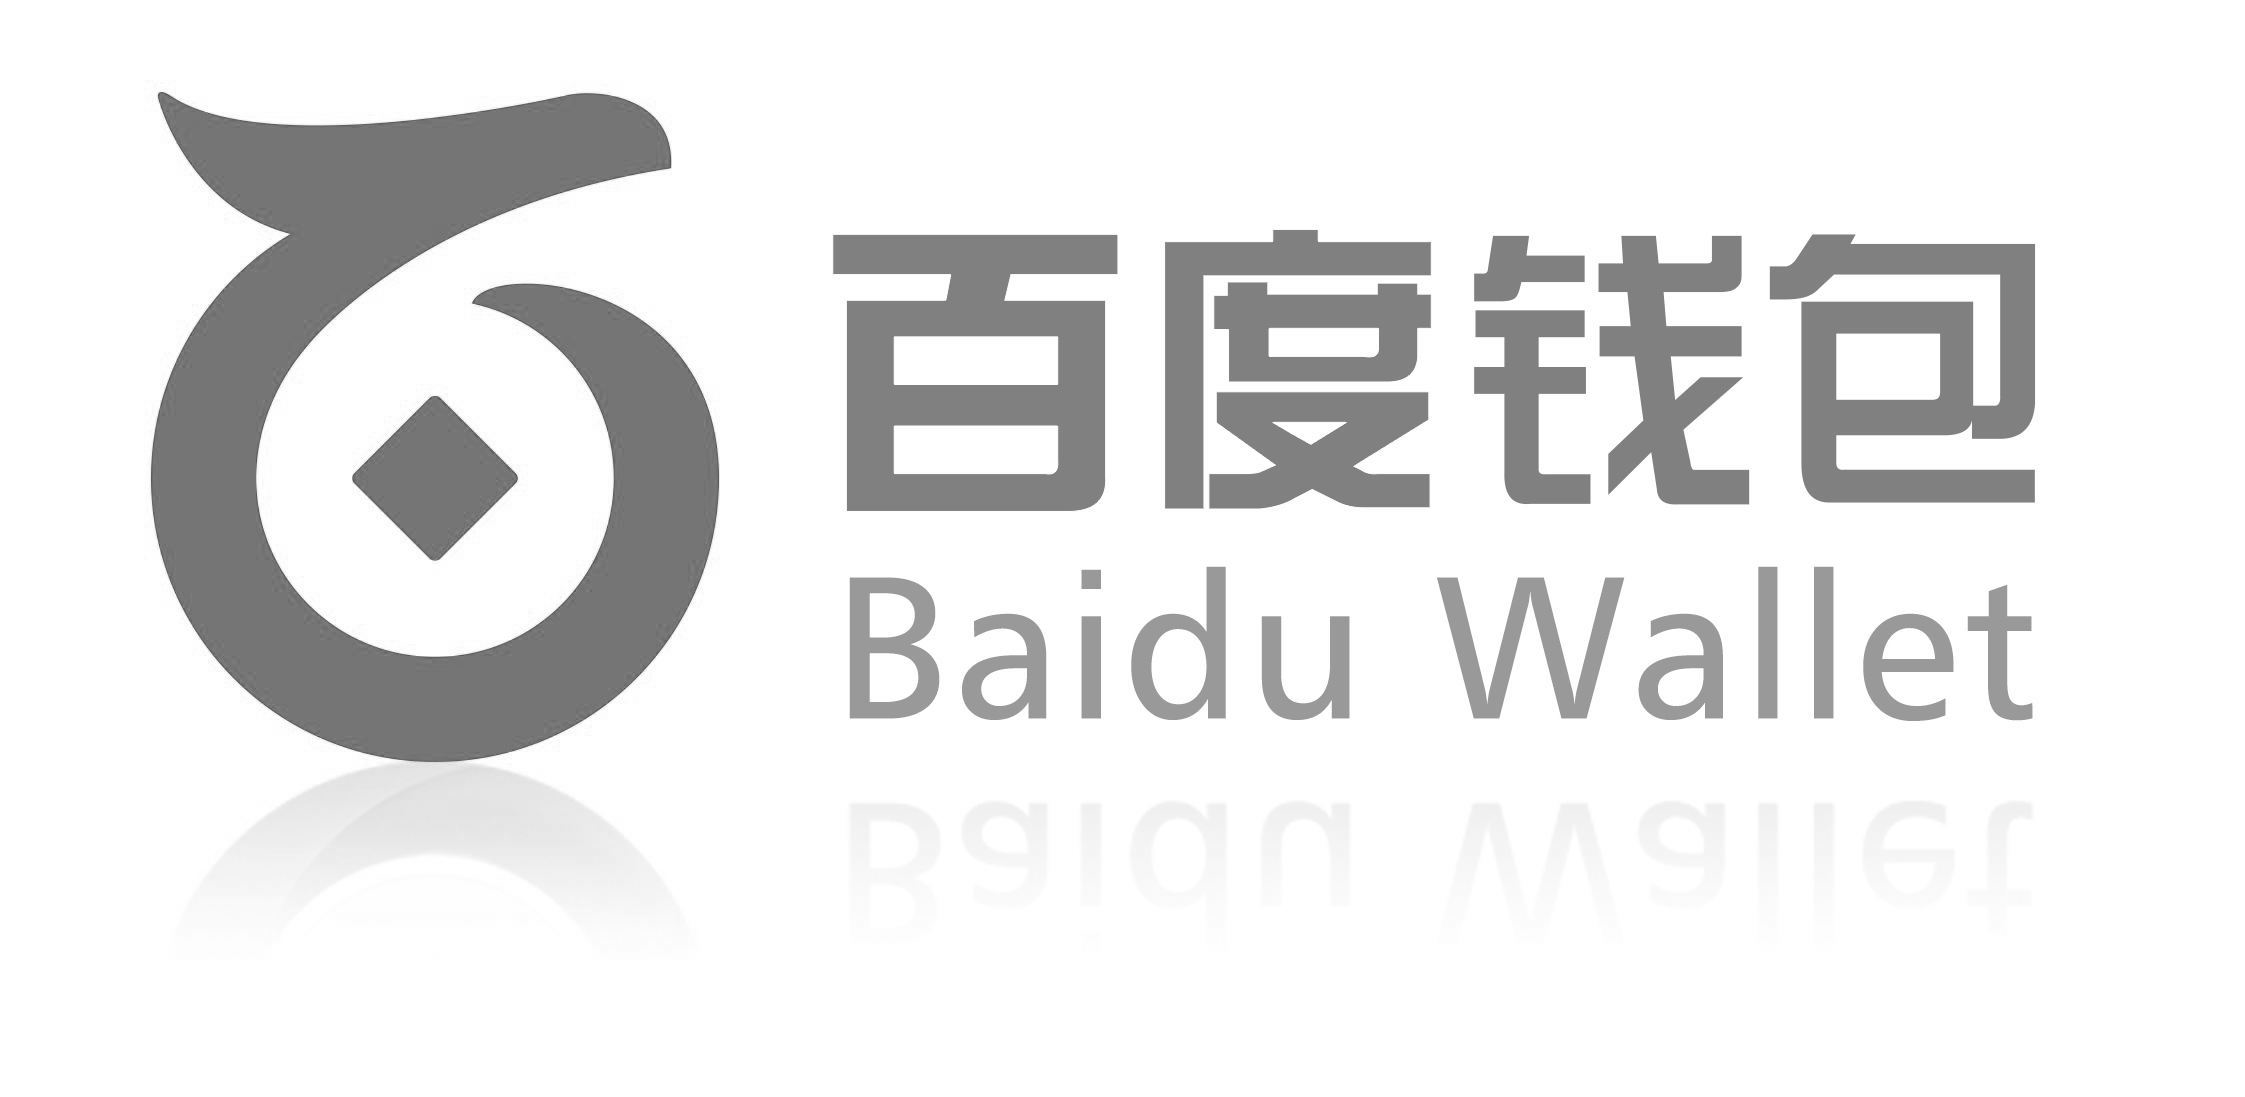 Baidu Network Logo - Baidu Wallet Logo | Nok Nok Labs